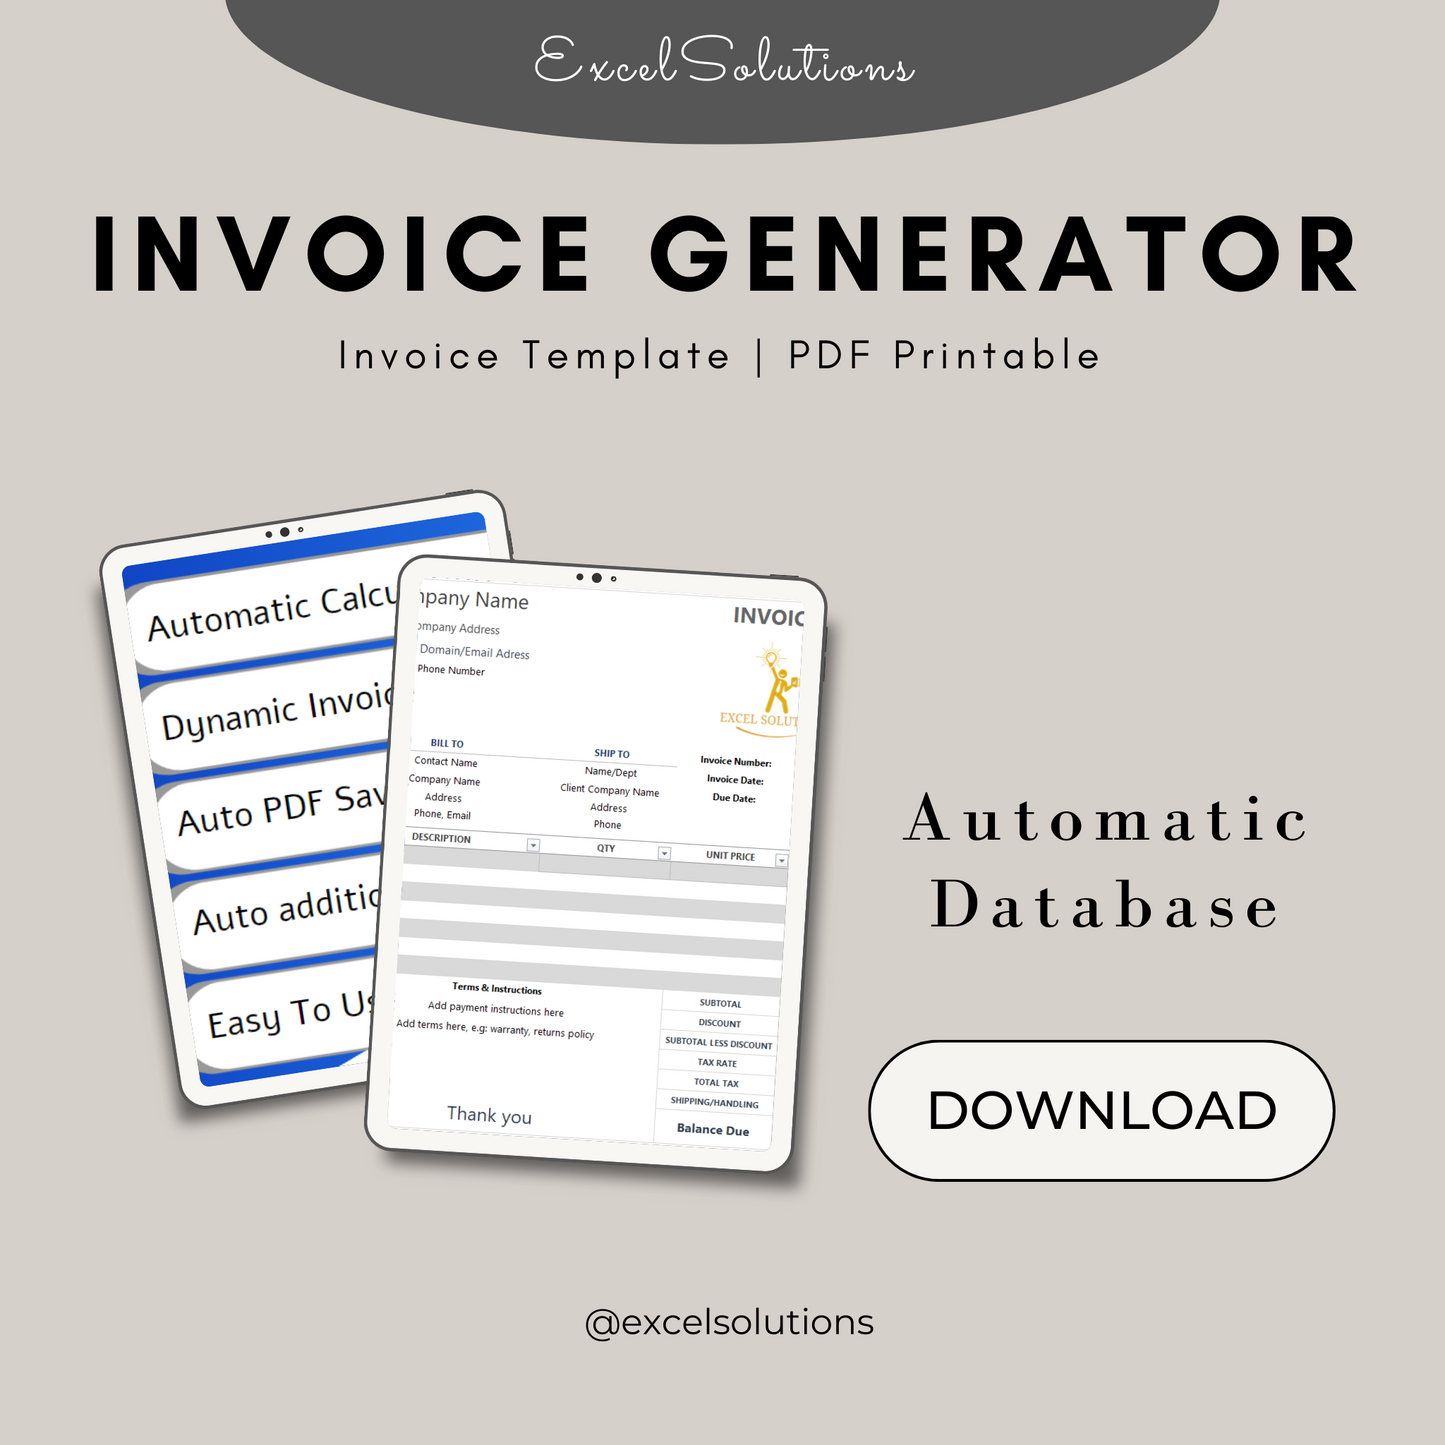 Invoice Template, Invoice Generator Tool, PDF Printable Invoice